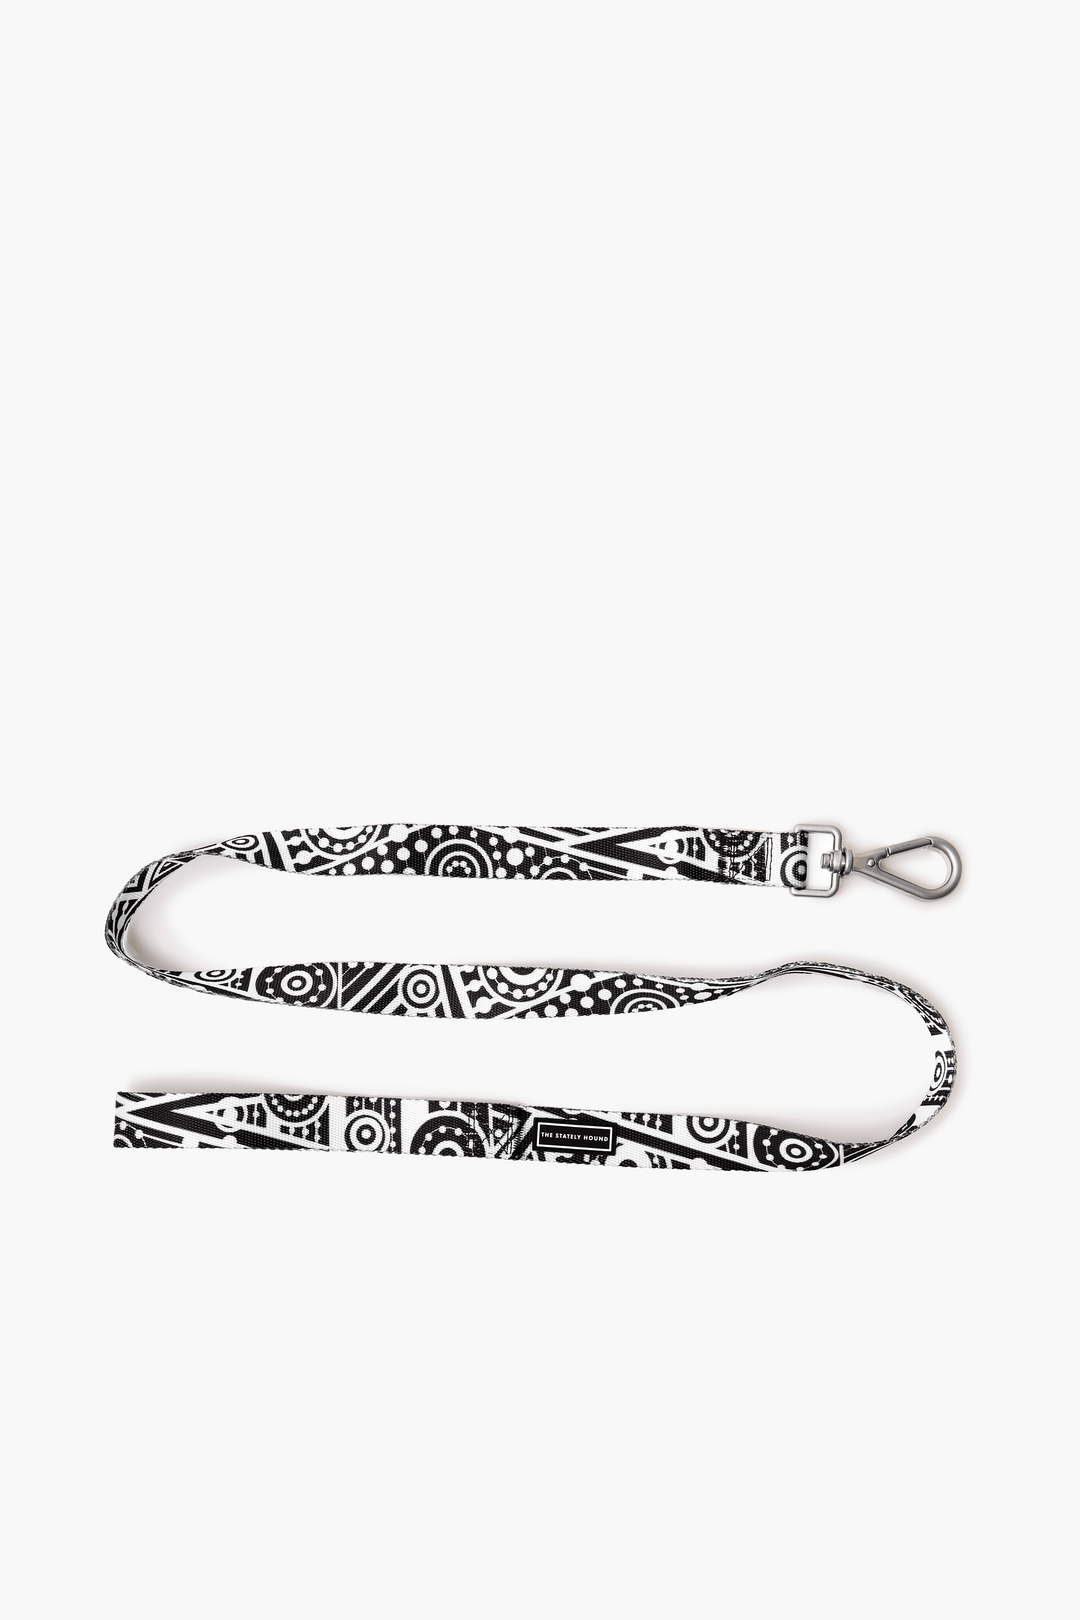 Geometric Print Dog Collar & Lead Set in Black & White